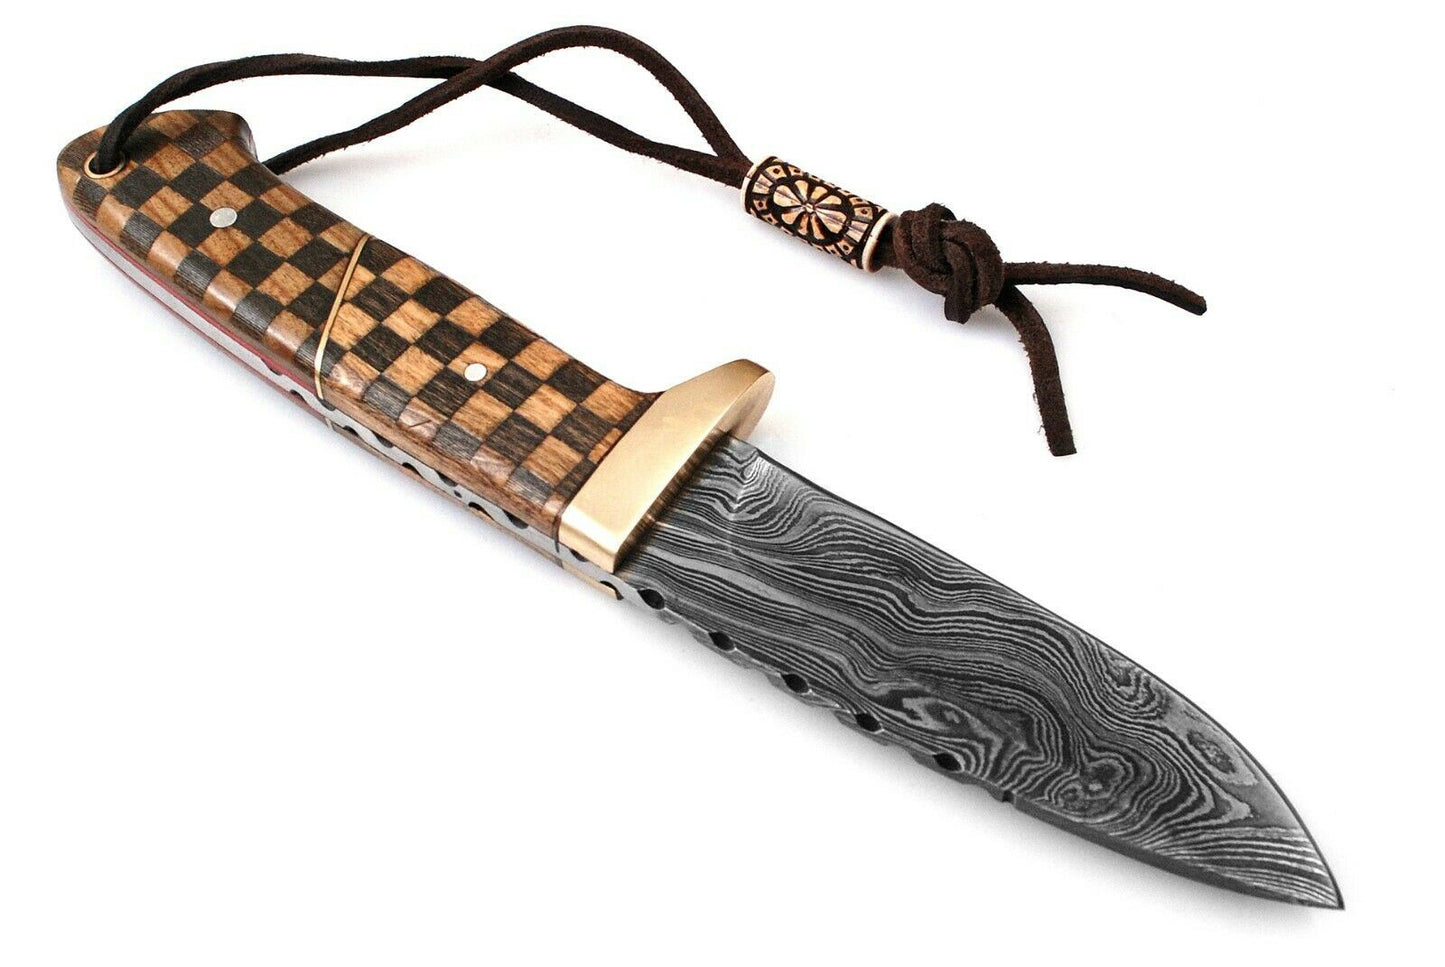 SHARDBLADE Custom Hand Forged Damascus Steel Hunting Skinner Knife & Wood Handle